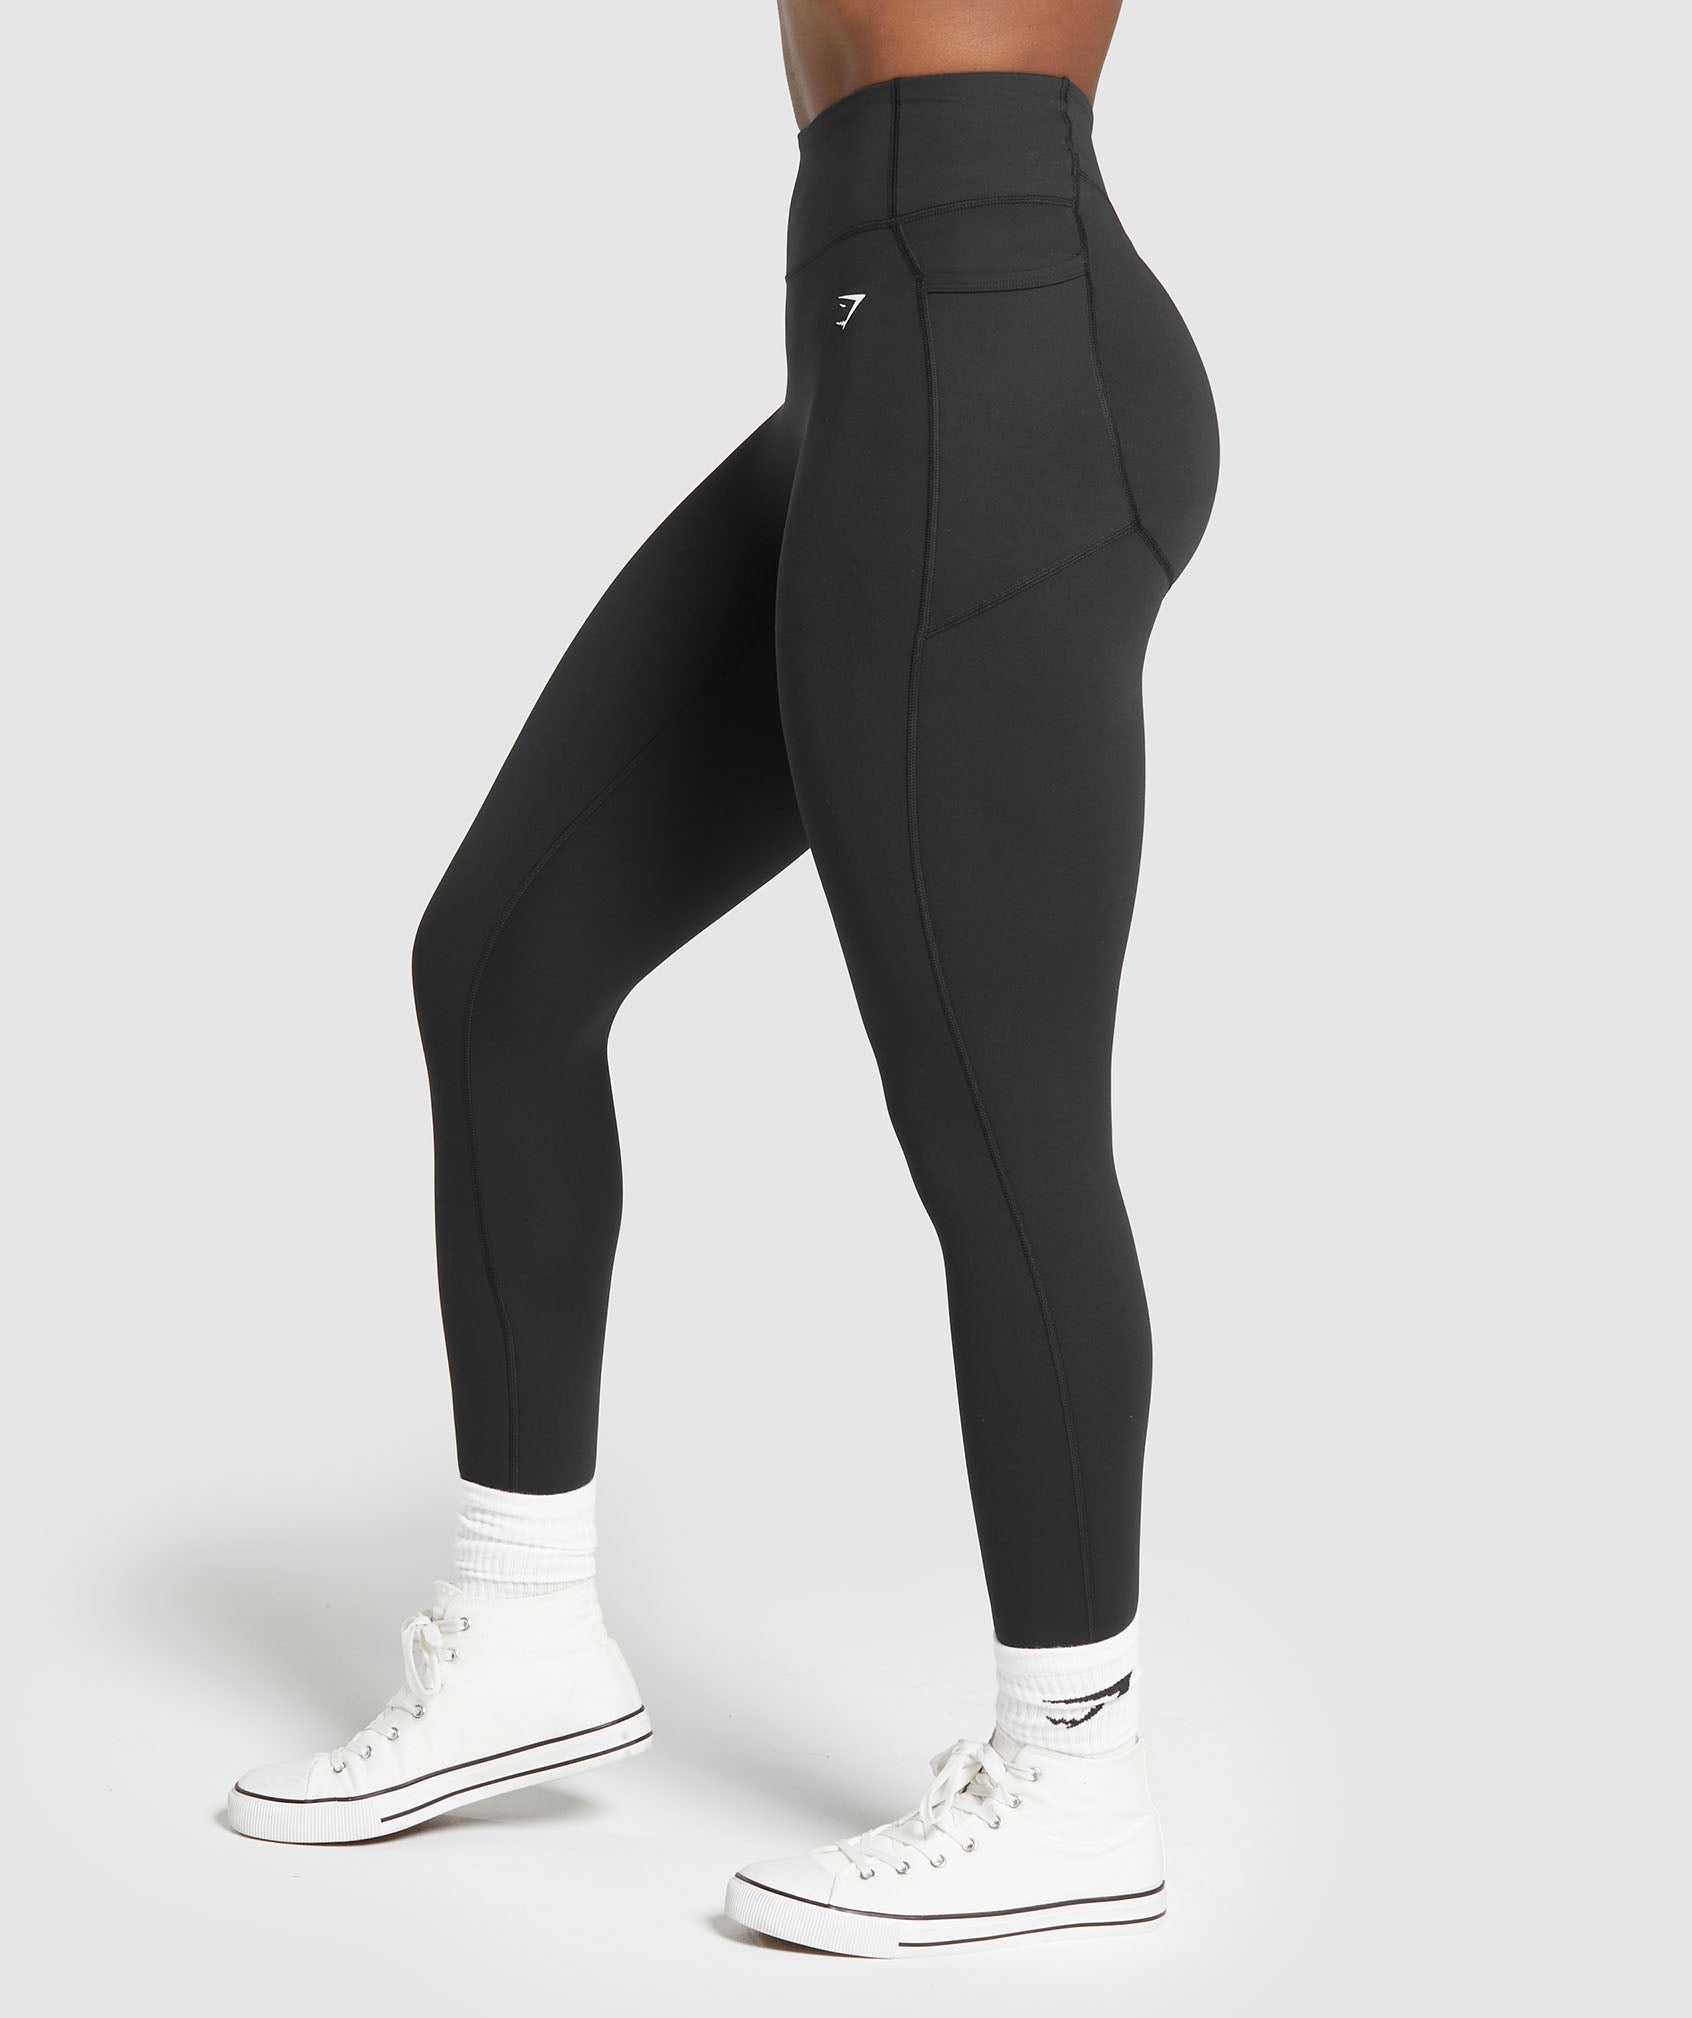 Prolific Health Womens Leggings Pocket Yoga Pants Pockets Workout Tummy  Support Control Yoga Pant Gym Leggings